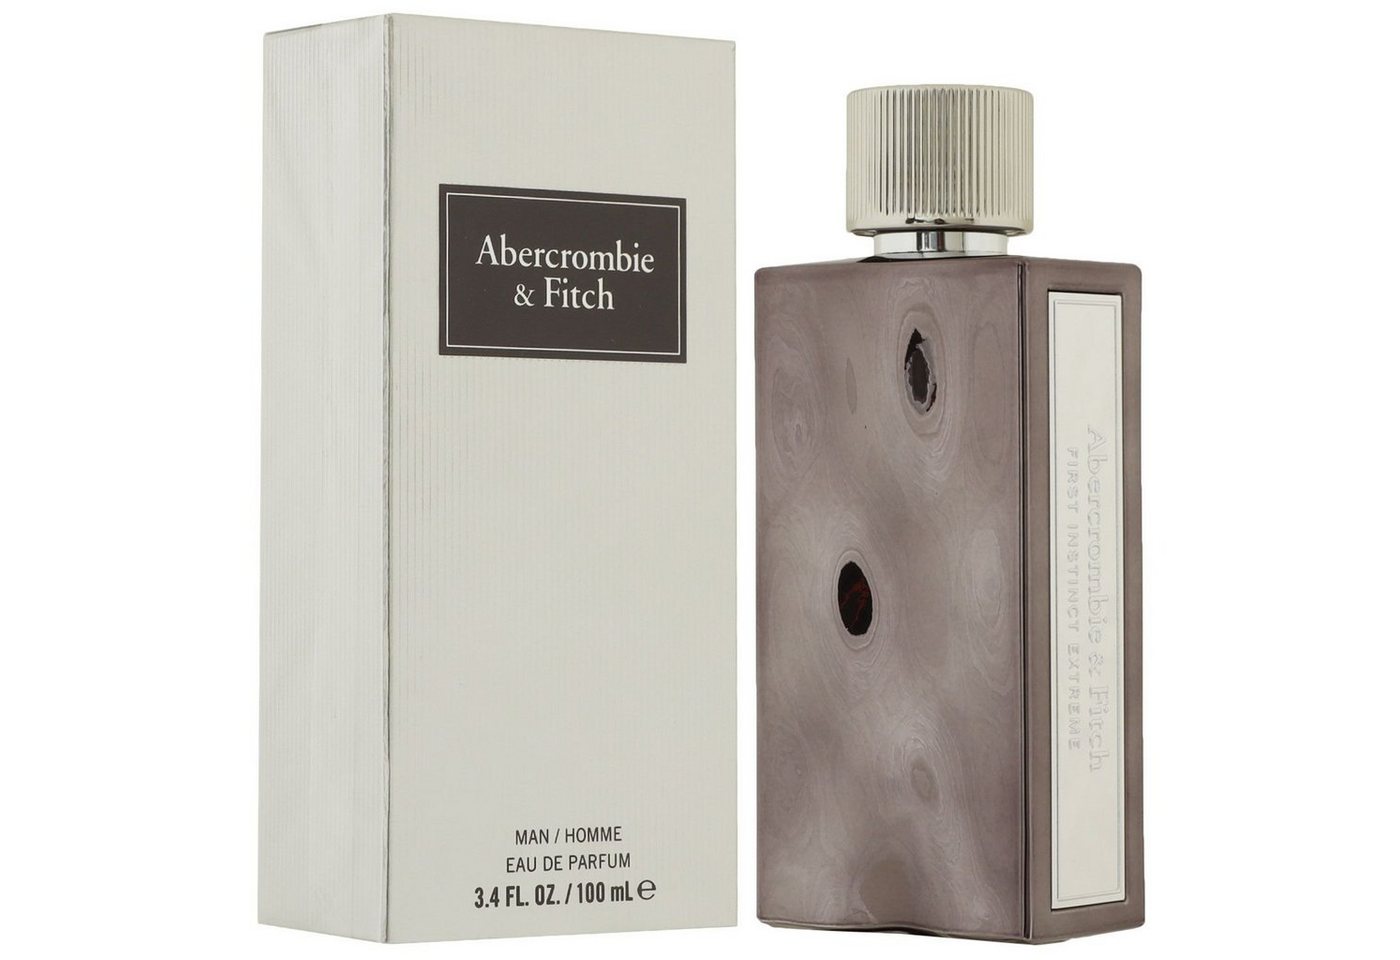 Abercrombie & Fitch Eau de Parfum First Instinct Extreme 100 ml von Abercrombie & Fitch